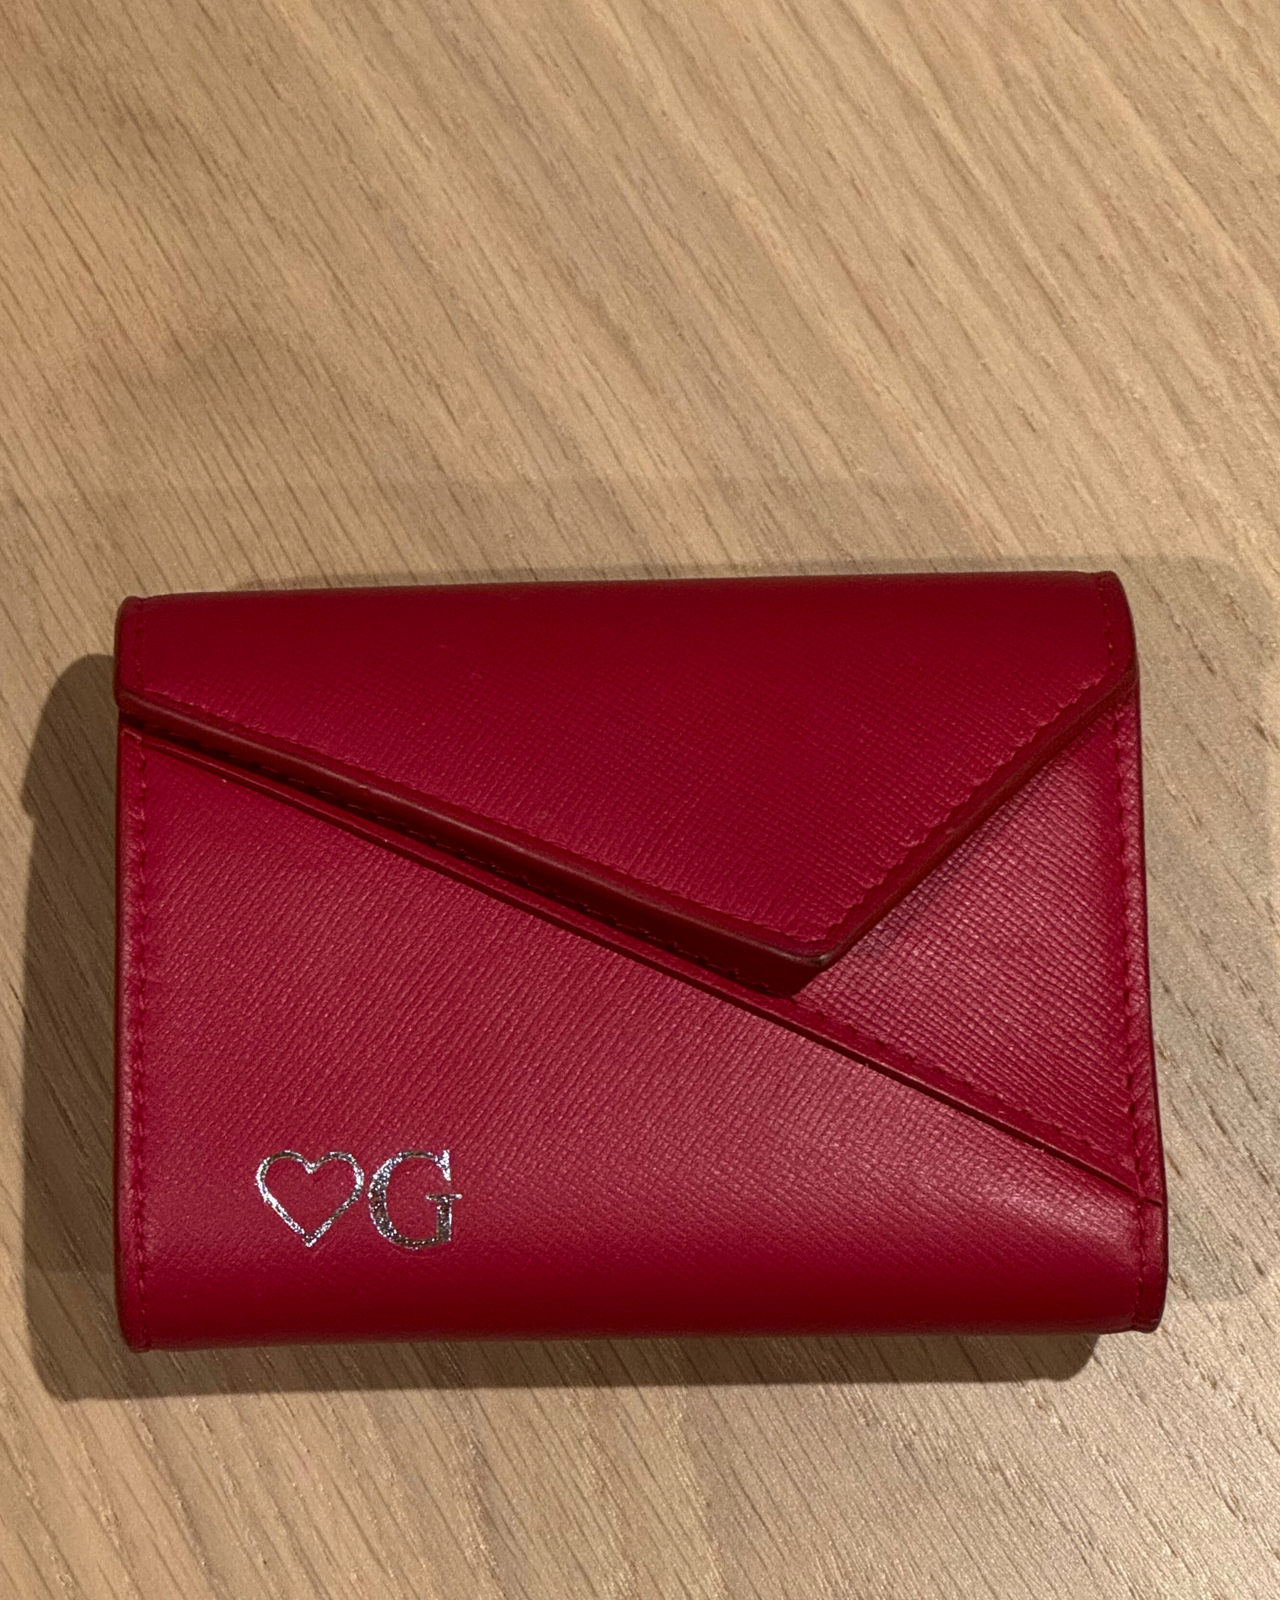 PROSPERA Wallet Red